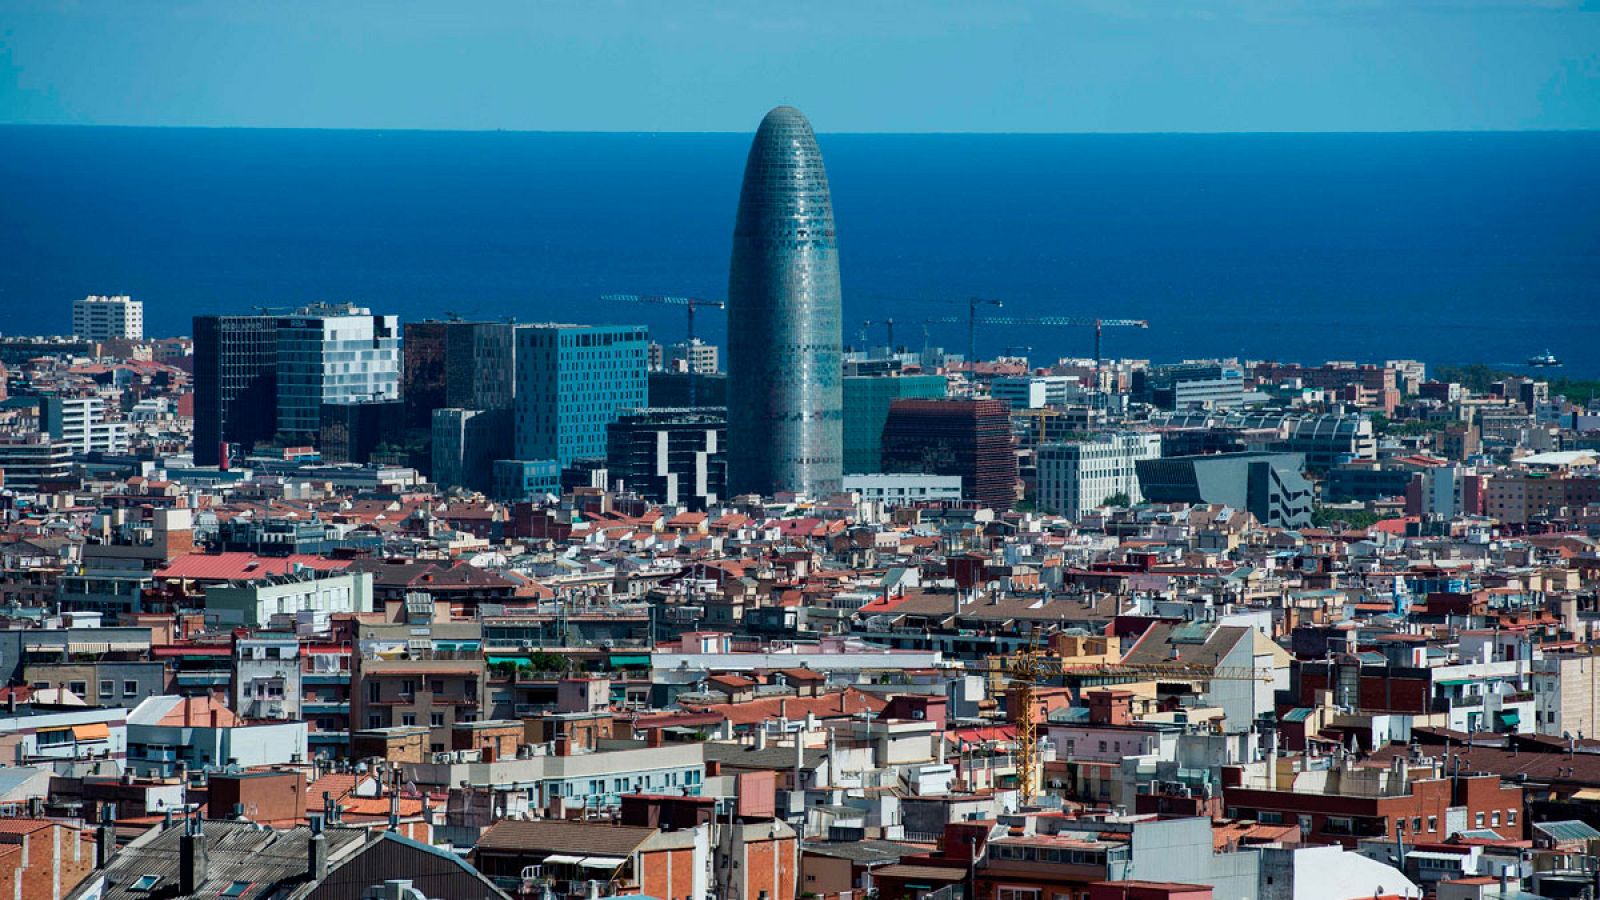 Vista panorámica de Barcelona